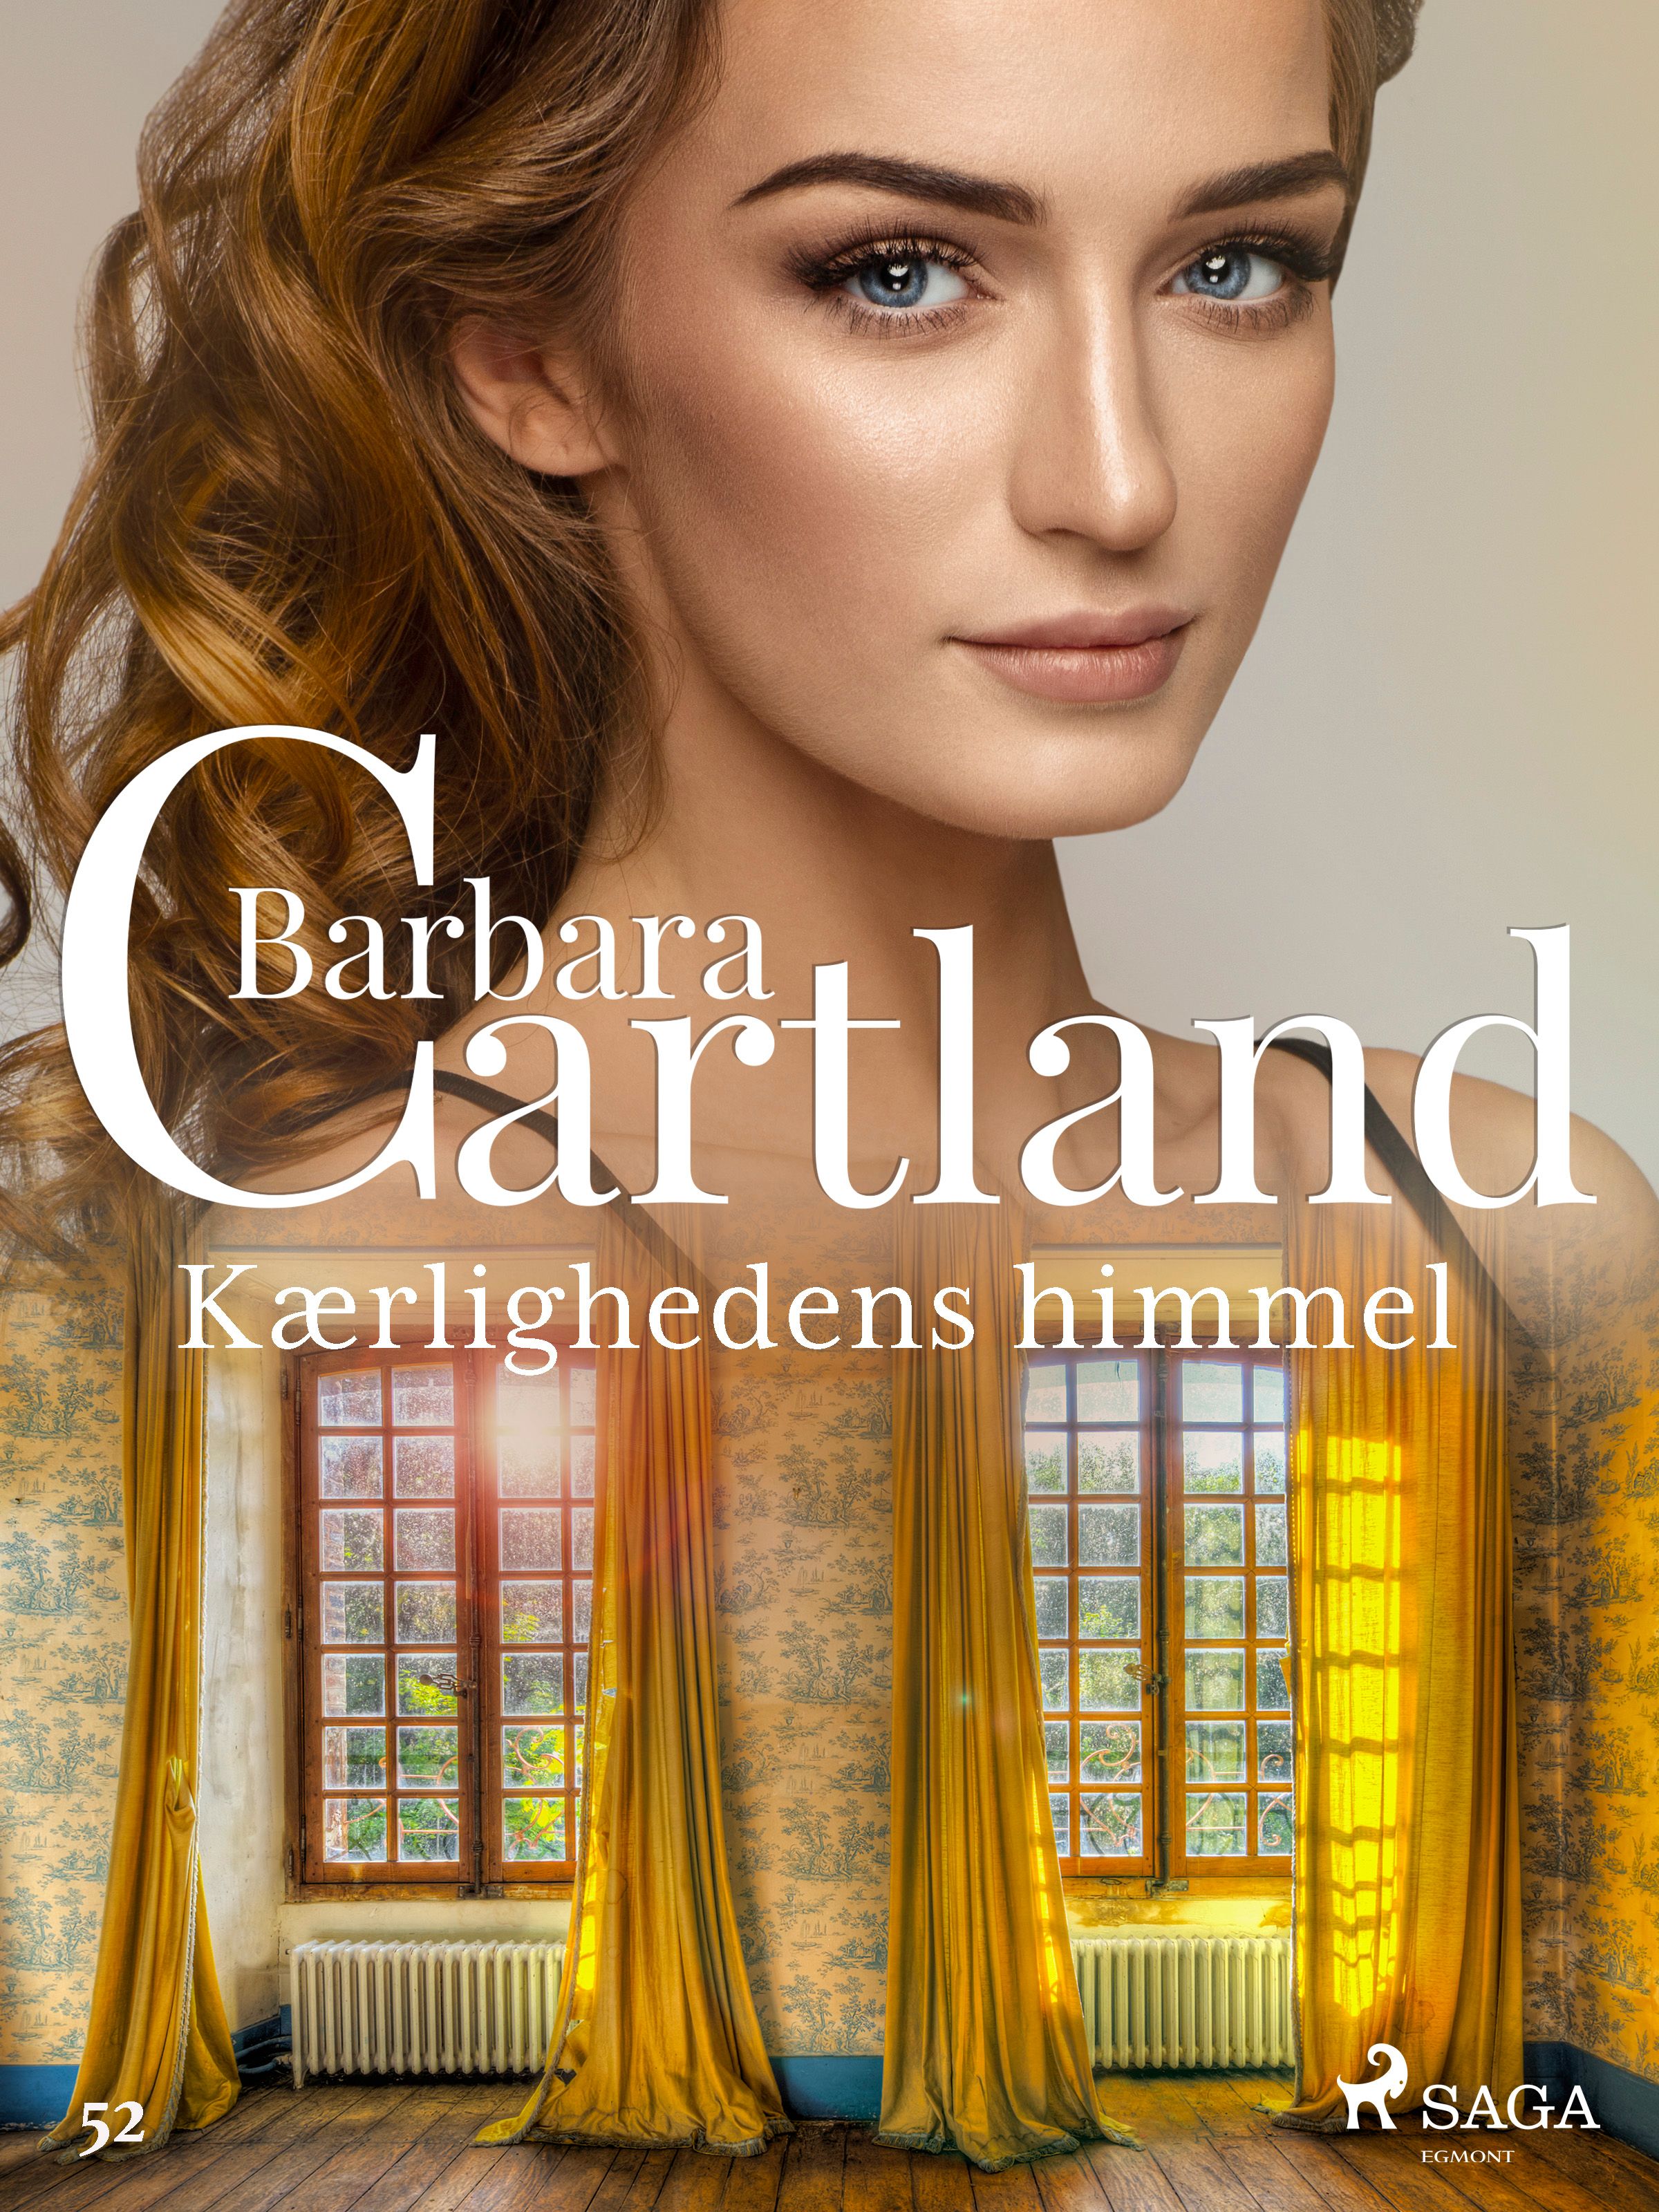 Kærlighedens himmel, e-bok av Barbara Cartland